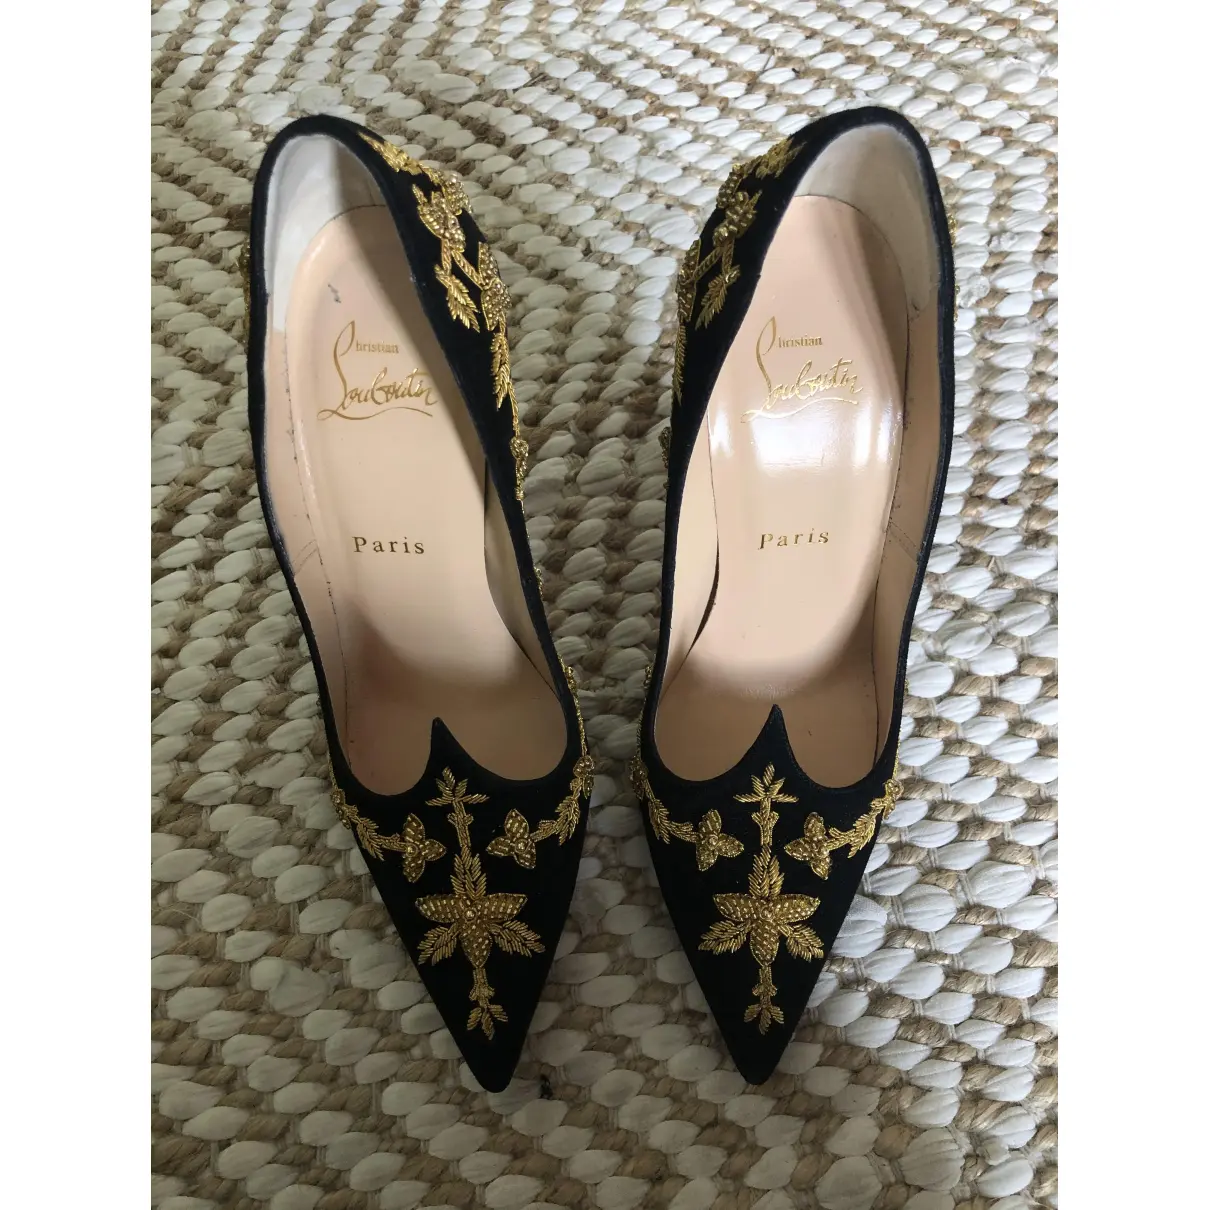 Buy Christian Louboutin So Kate  heels online